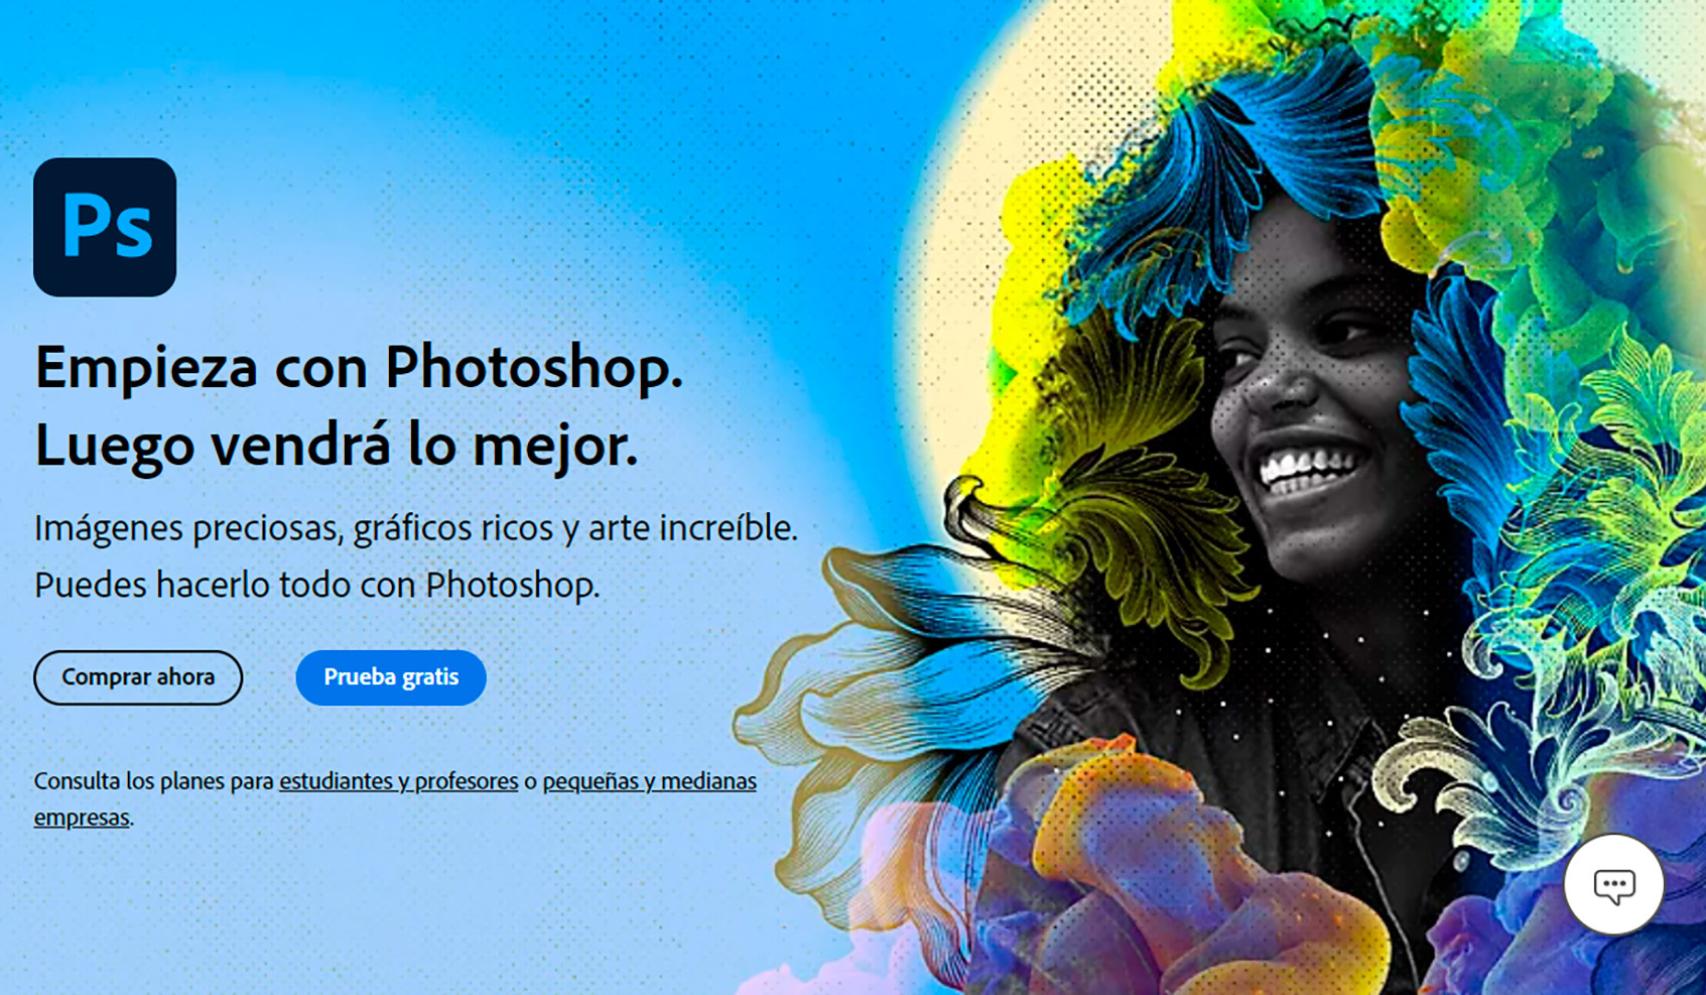 Adobe Photoshop on the web